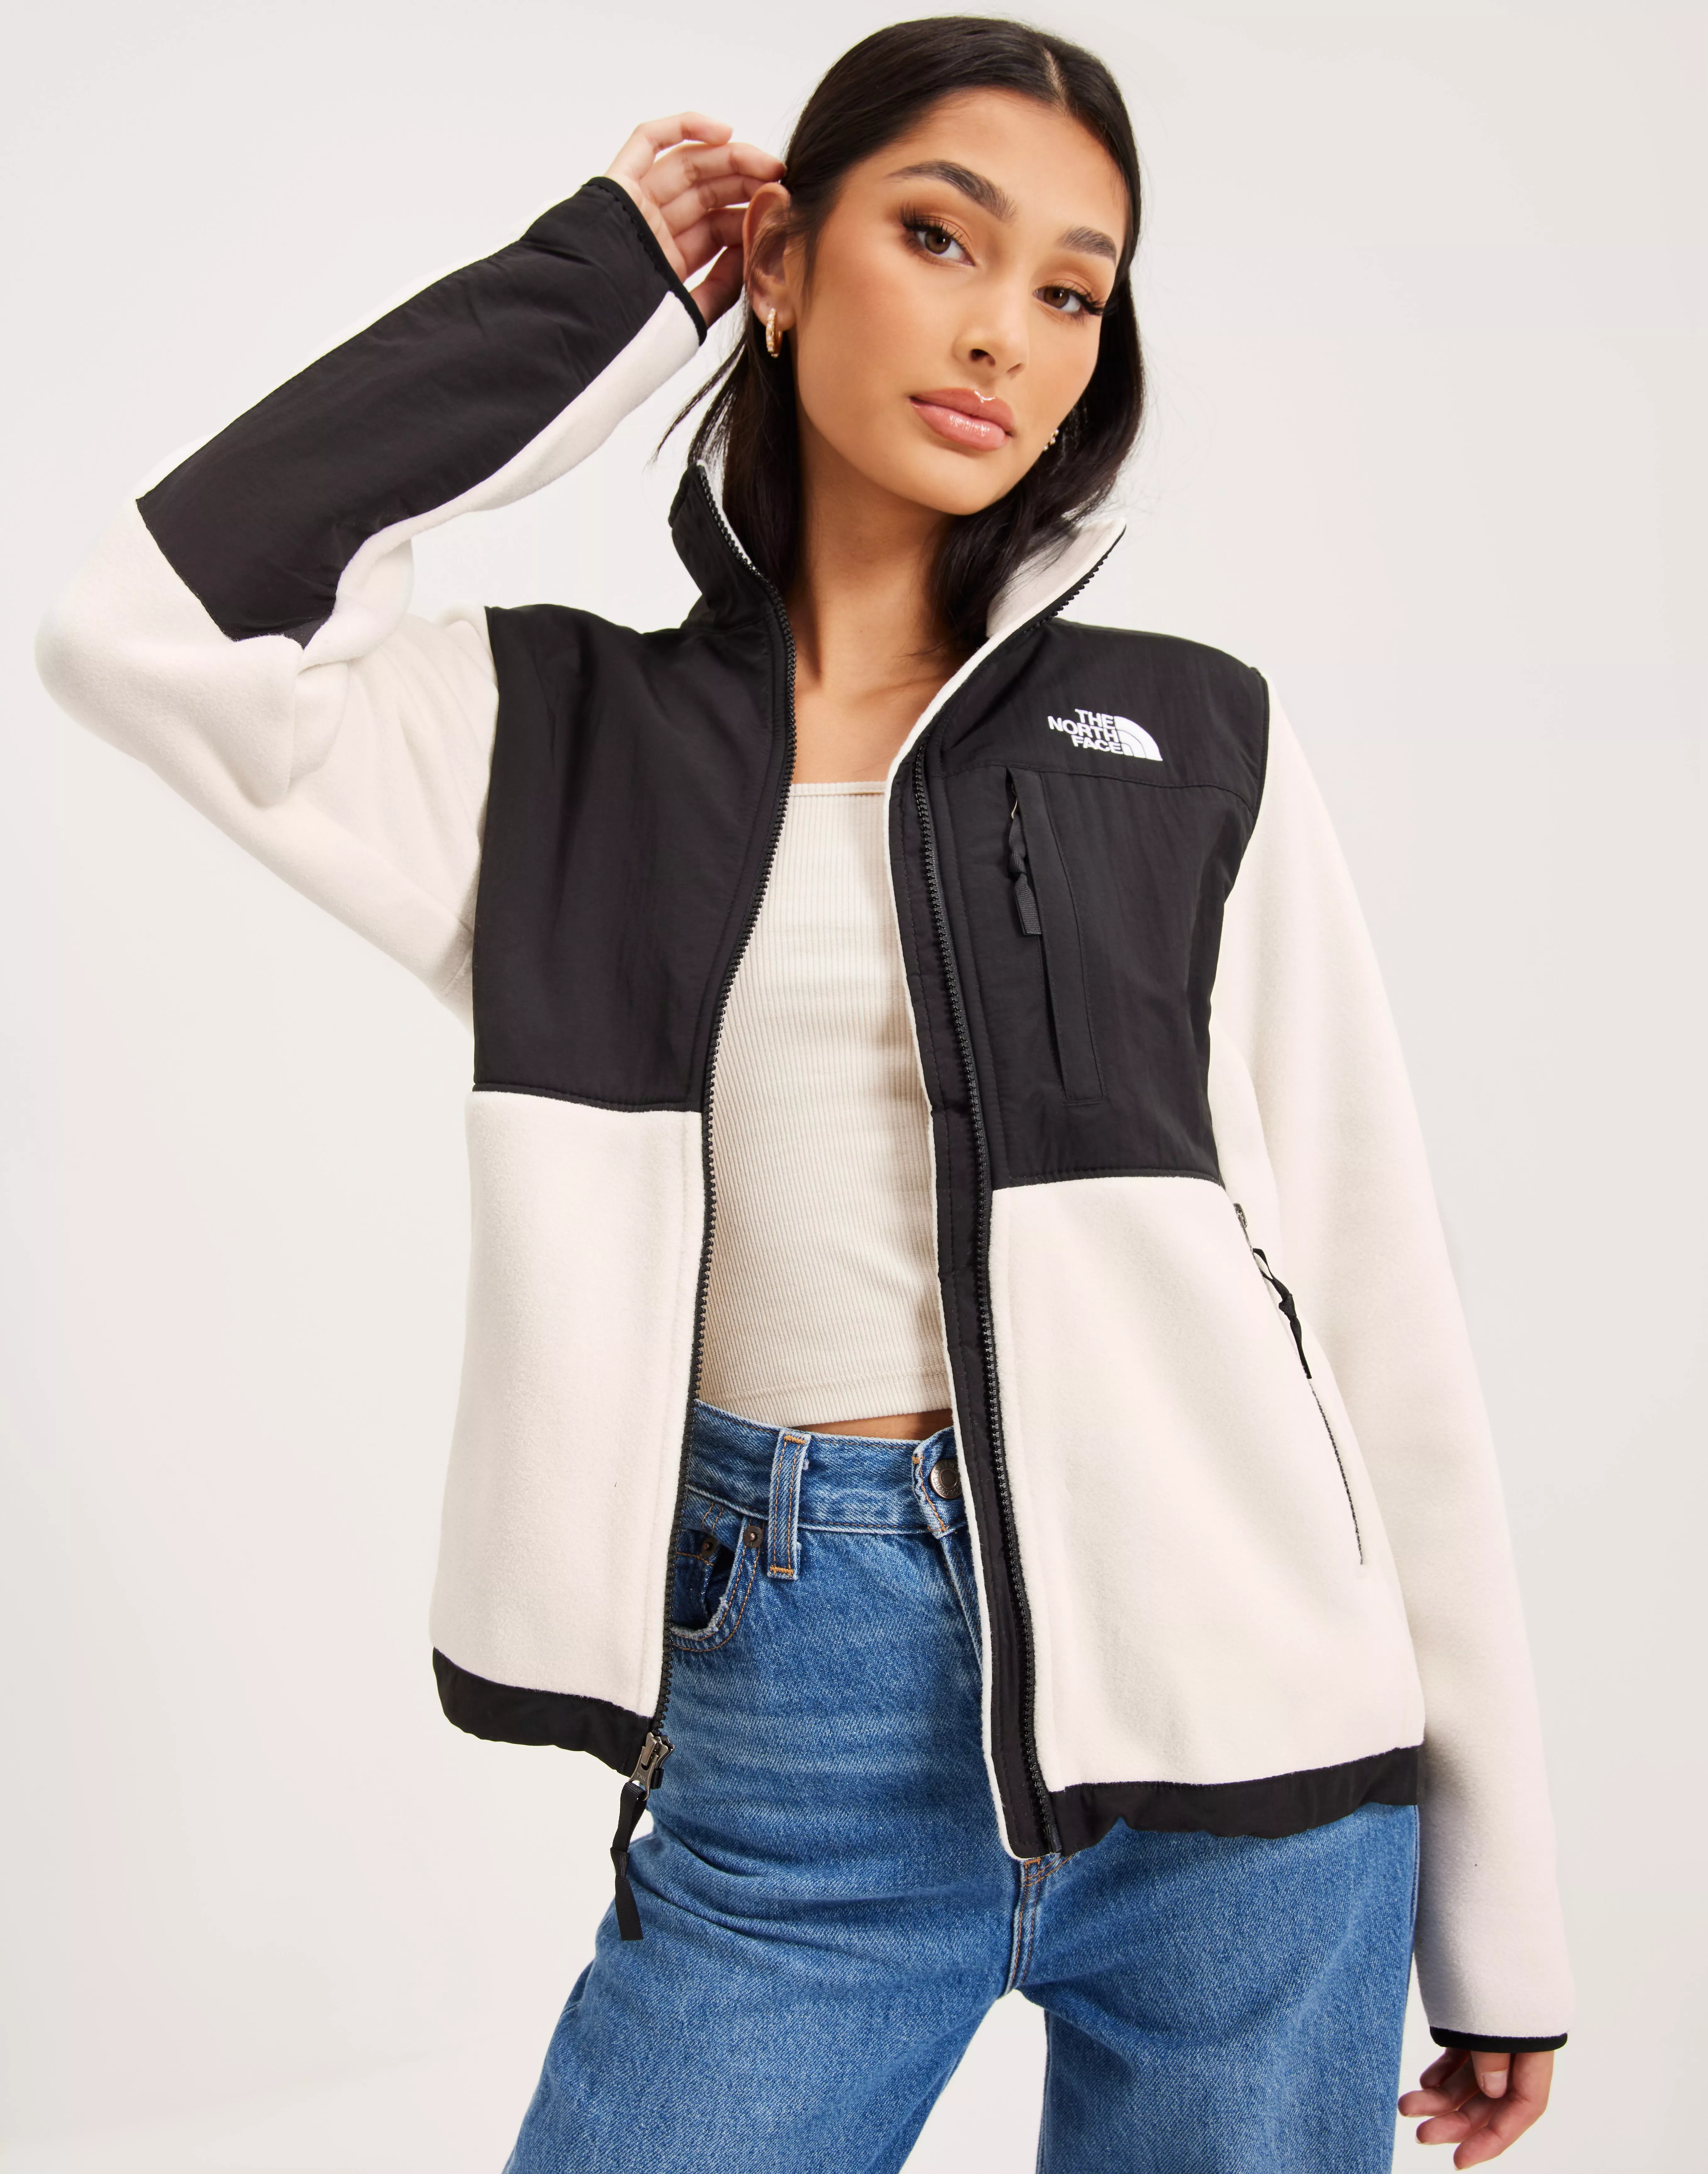 Buy The North Face Women's Denali Jacket - White